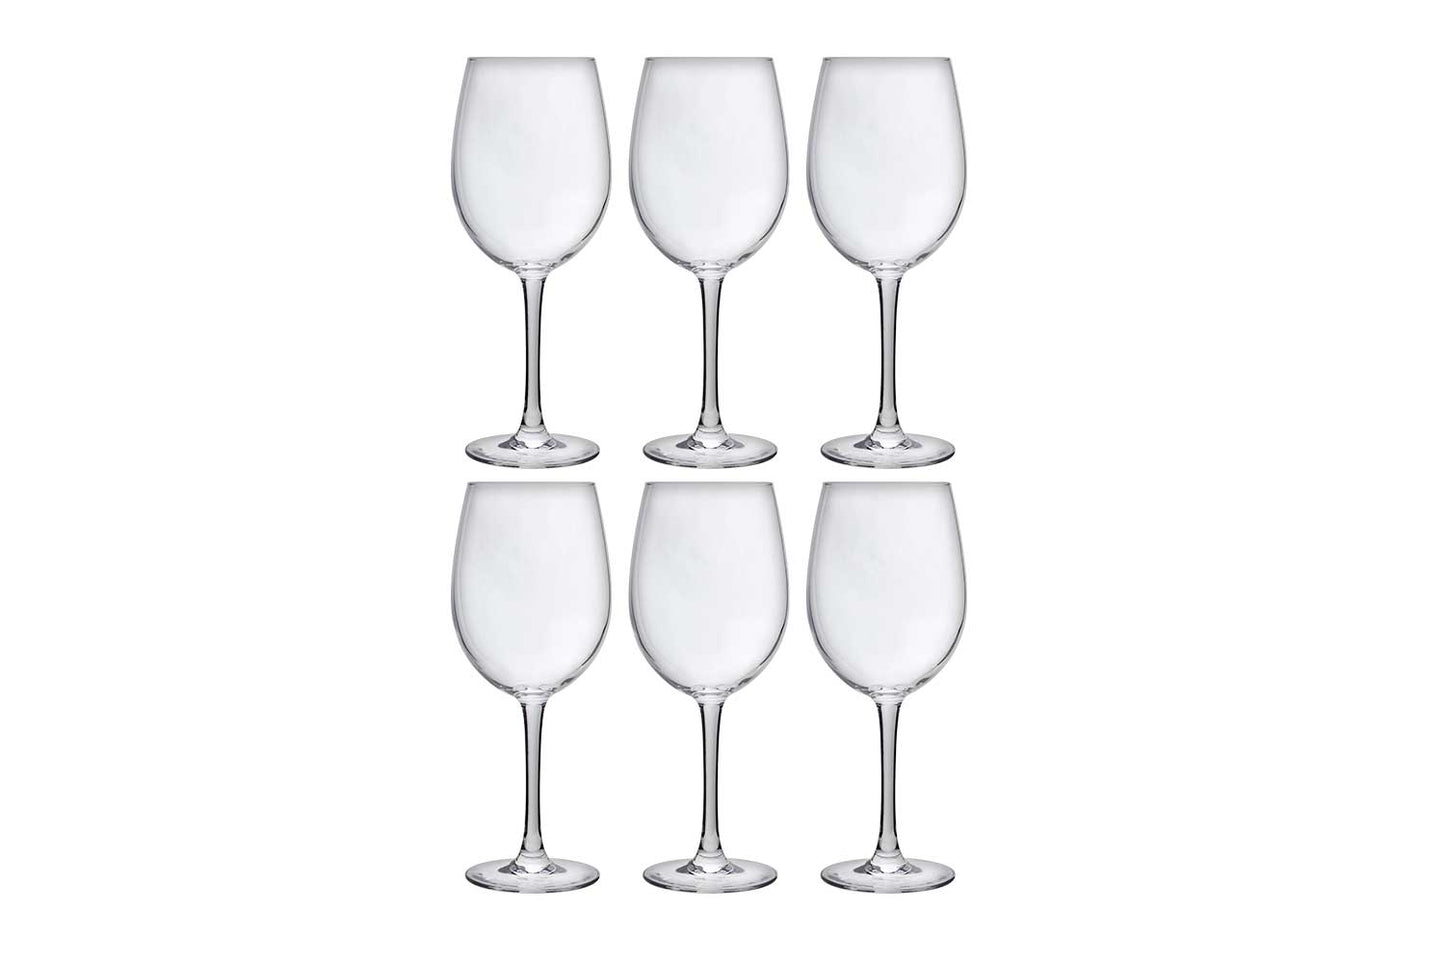 Cosy Moments Wine glass, 16.8 oz, 8.8 cm (3.4") dia., 21.9 cm (8.6") height, 6 each per set